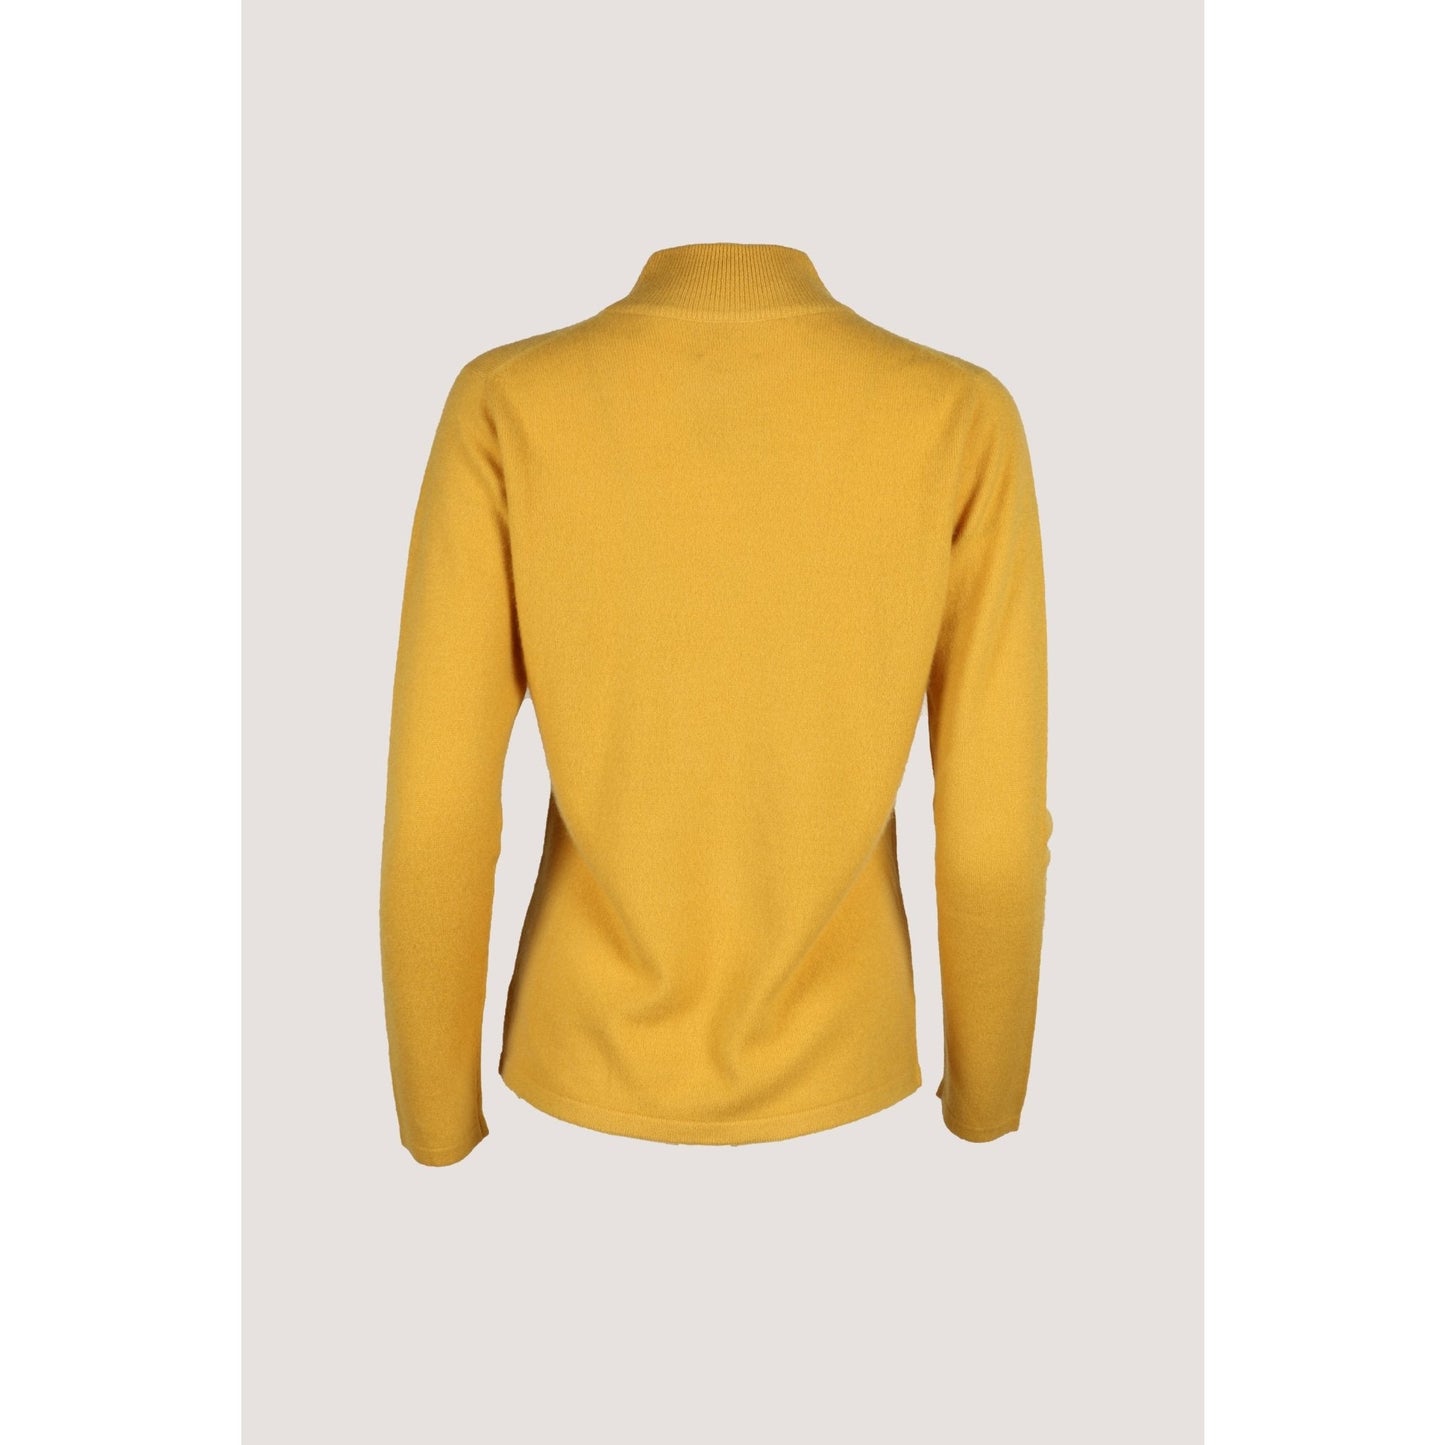 Half Roll Neck Sweater Yellow - Crumpet Chowk